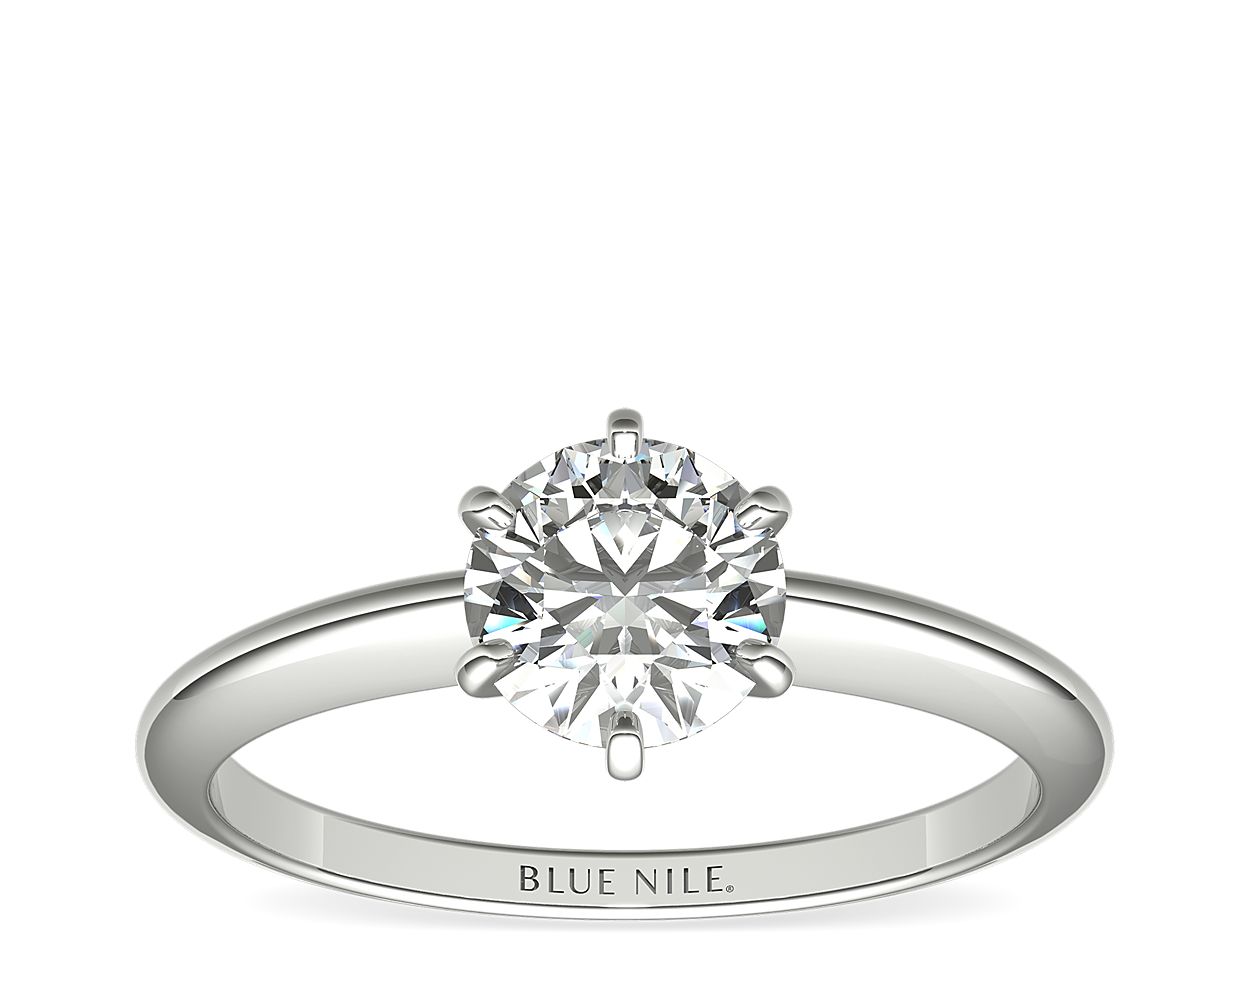 Buy Platinum Waveform Engagement Rings | Platinum Engagement Rings For  Couples |